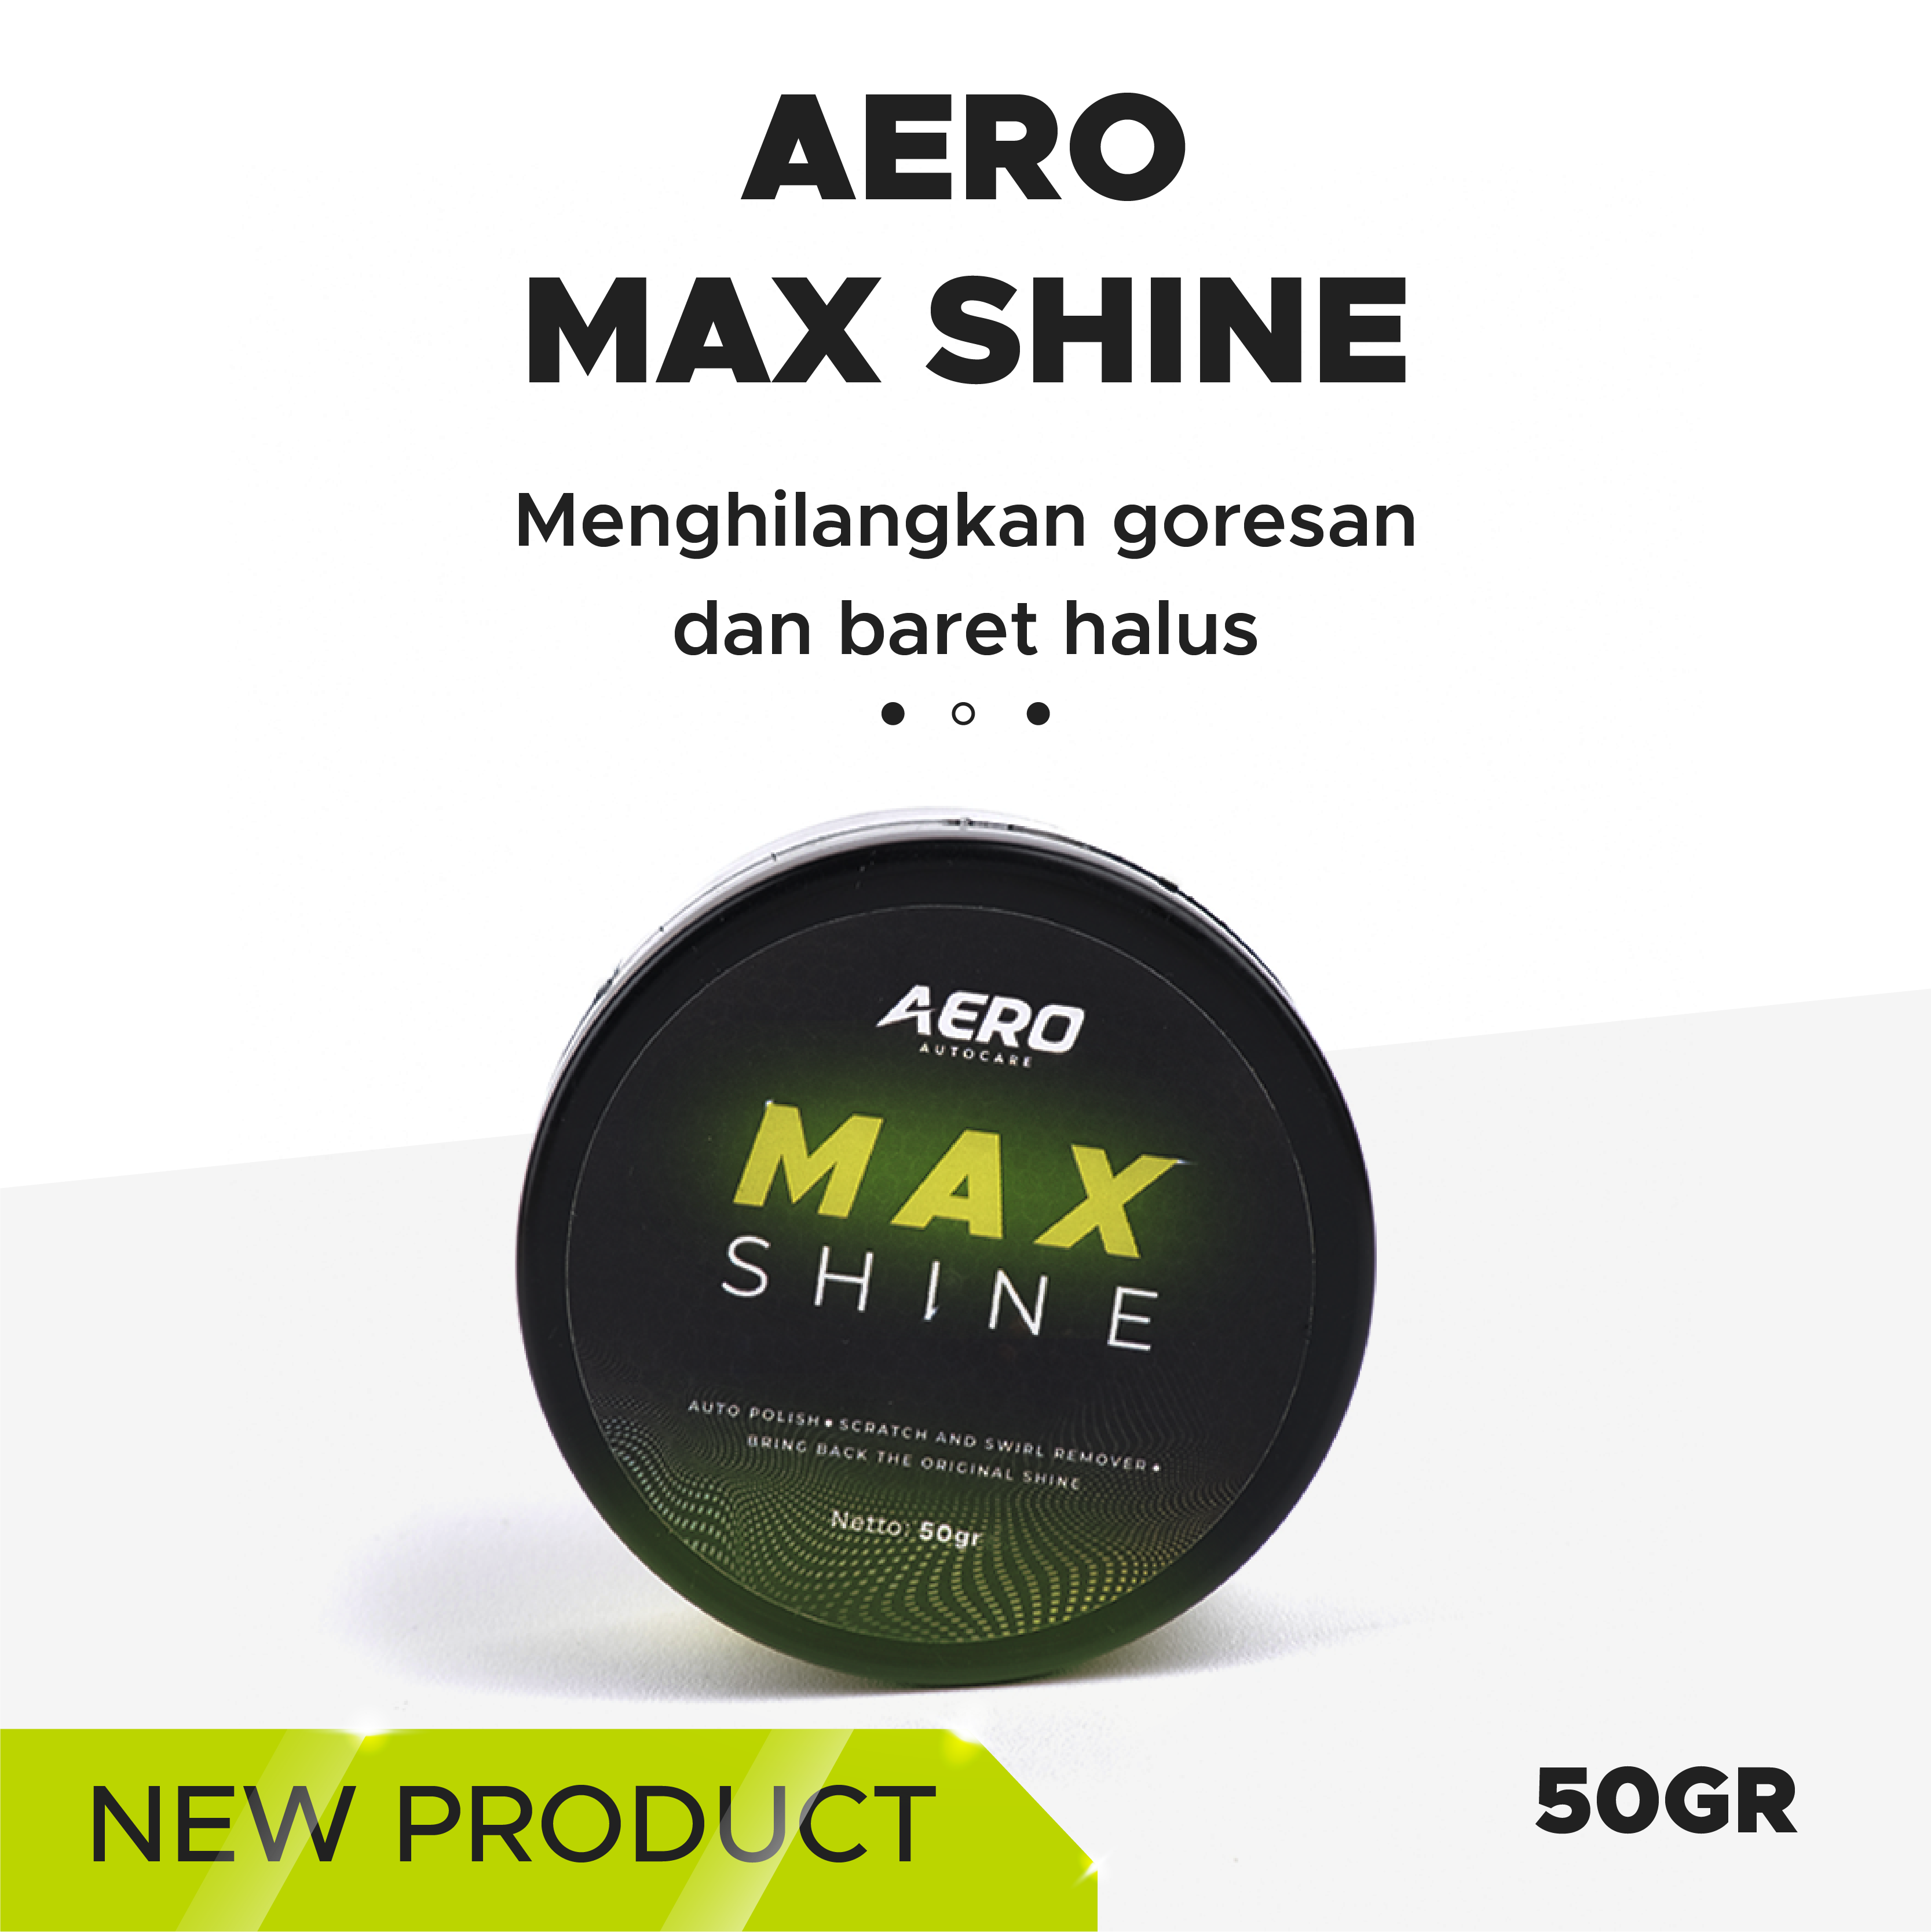 Aero Shopee Cover_Max Shine 1